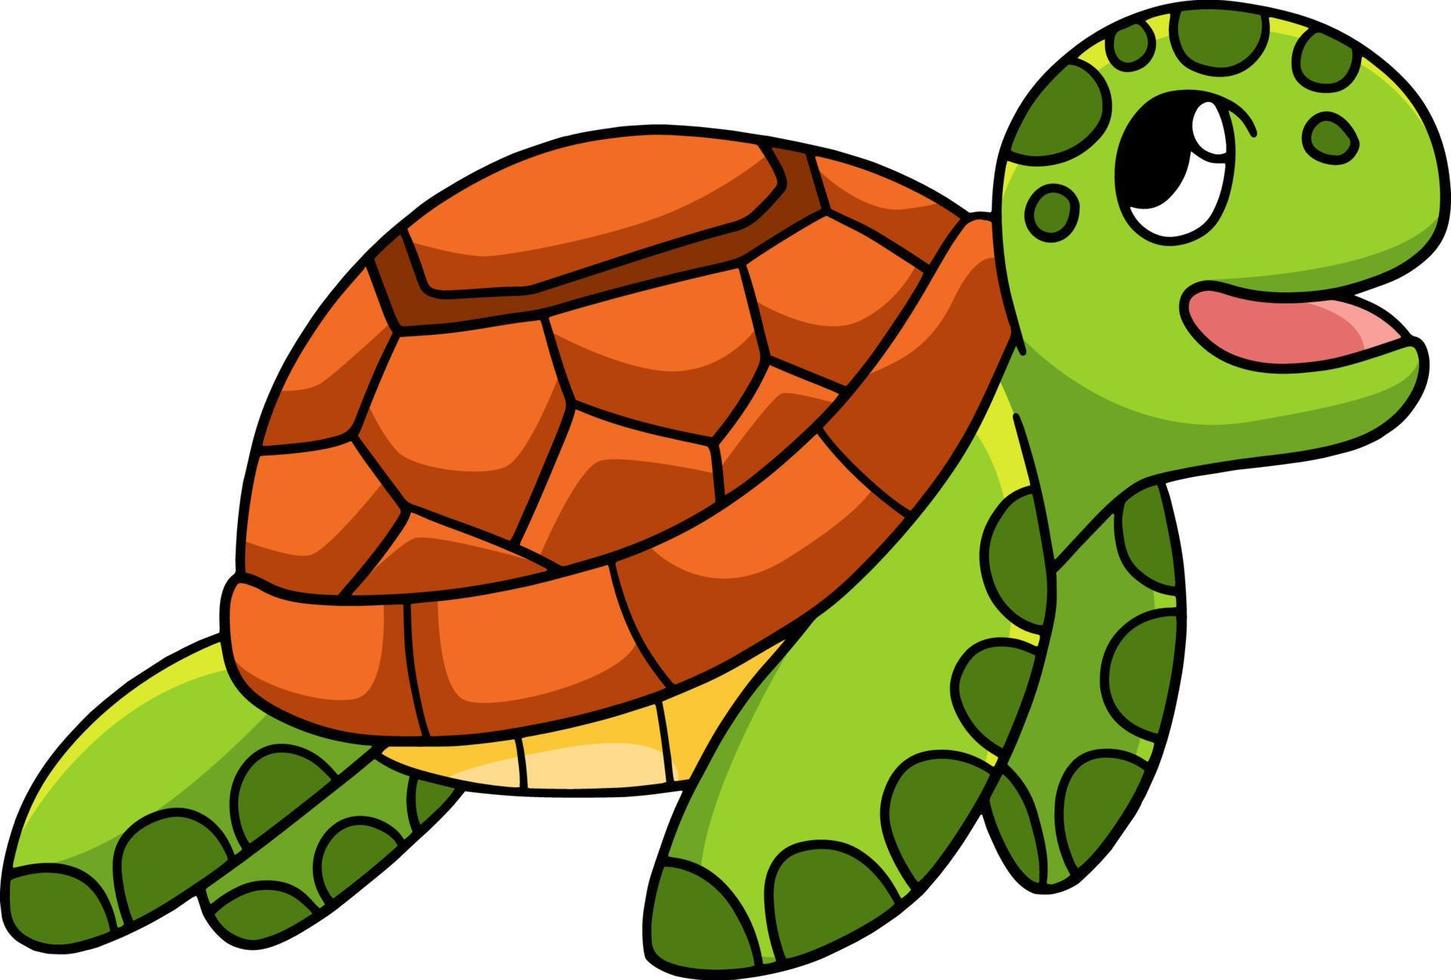 Sea Turtle Cartoon Colored Clipart Illustration vector